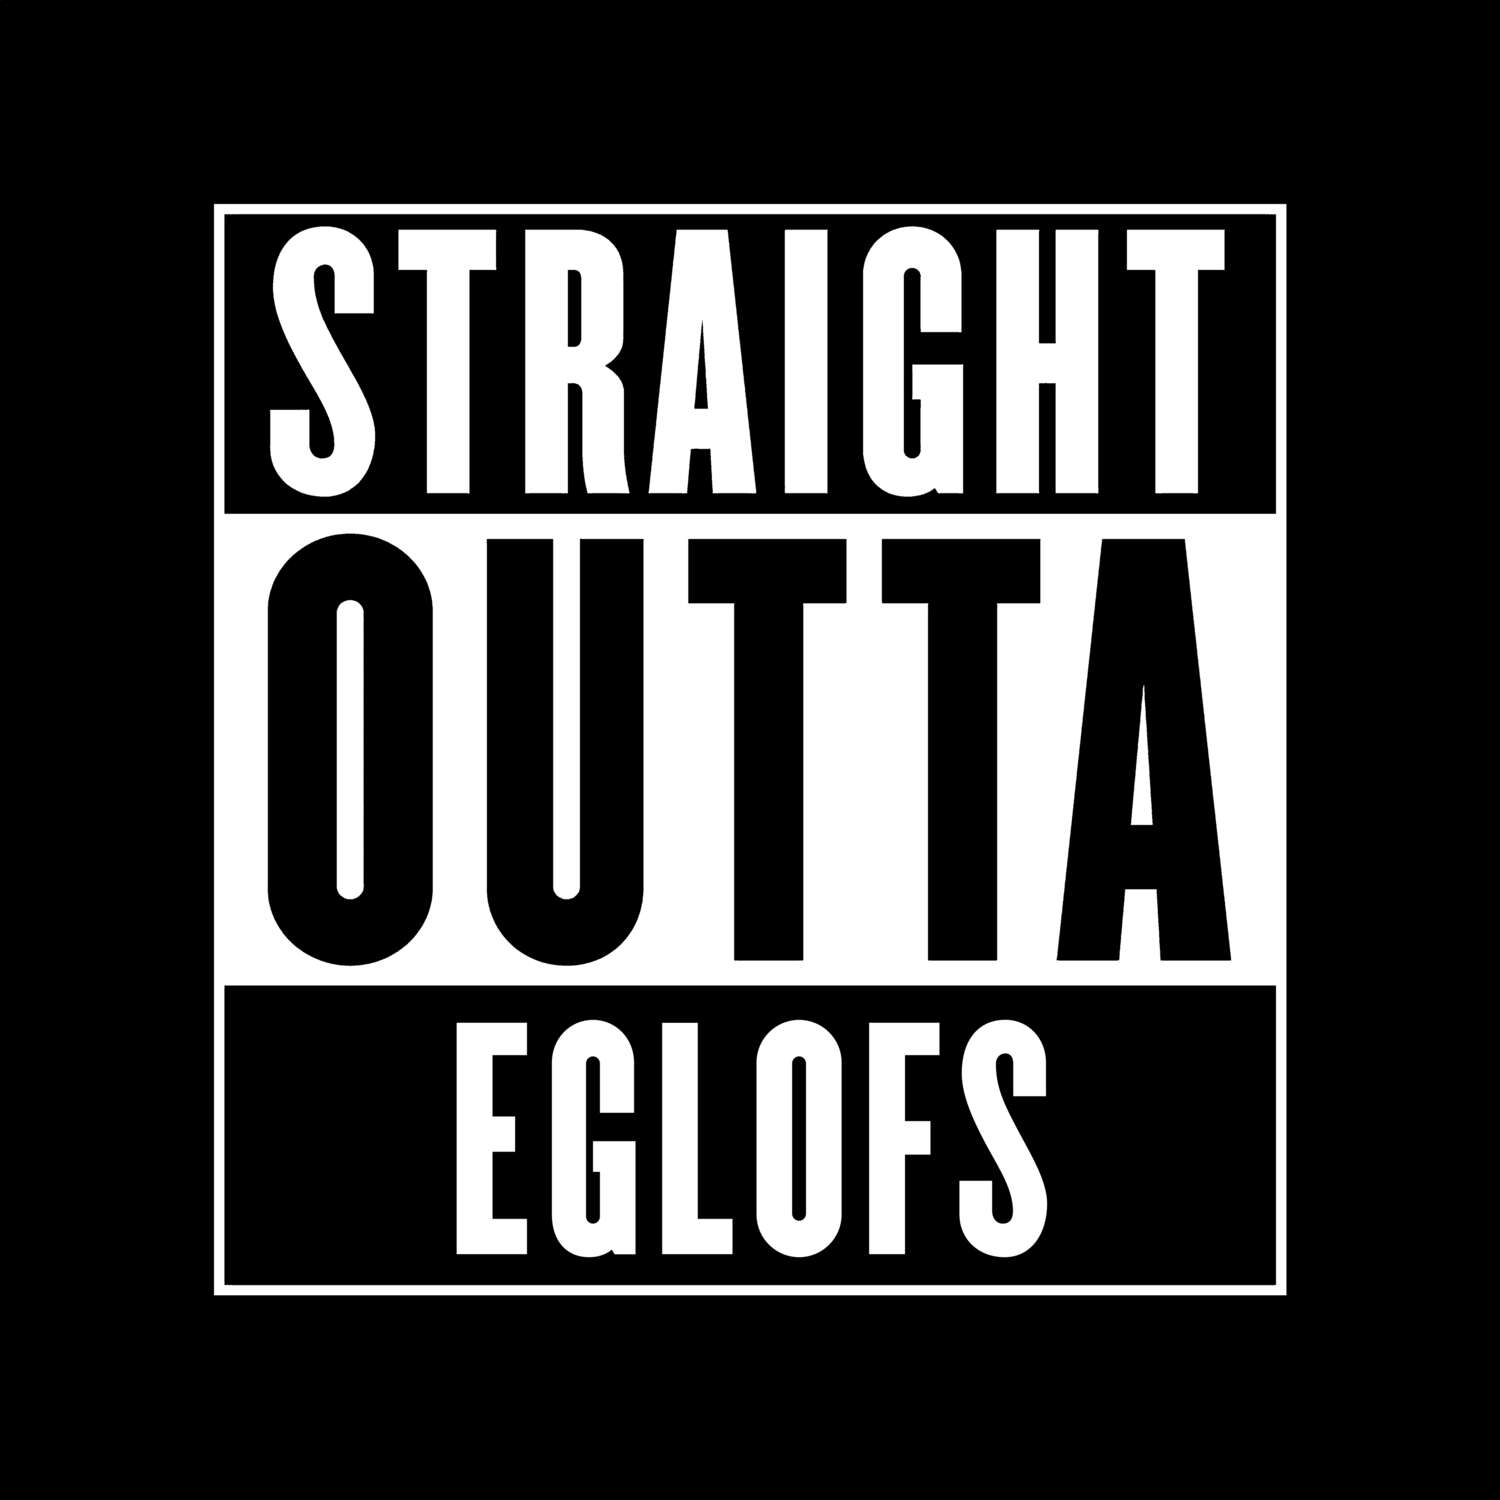 Eglofs T-Shirt »Straight Outta«